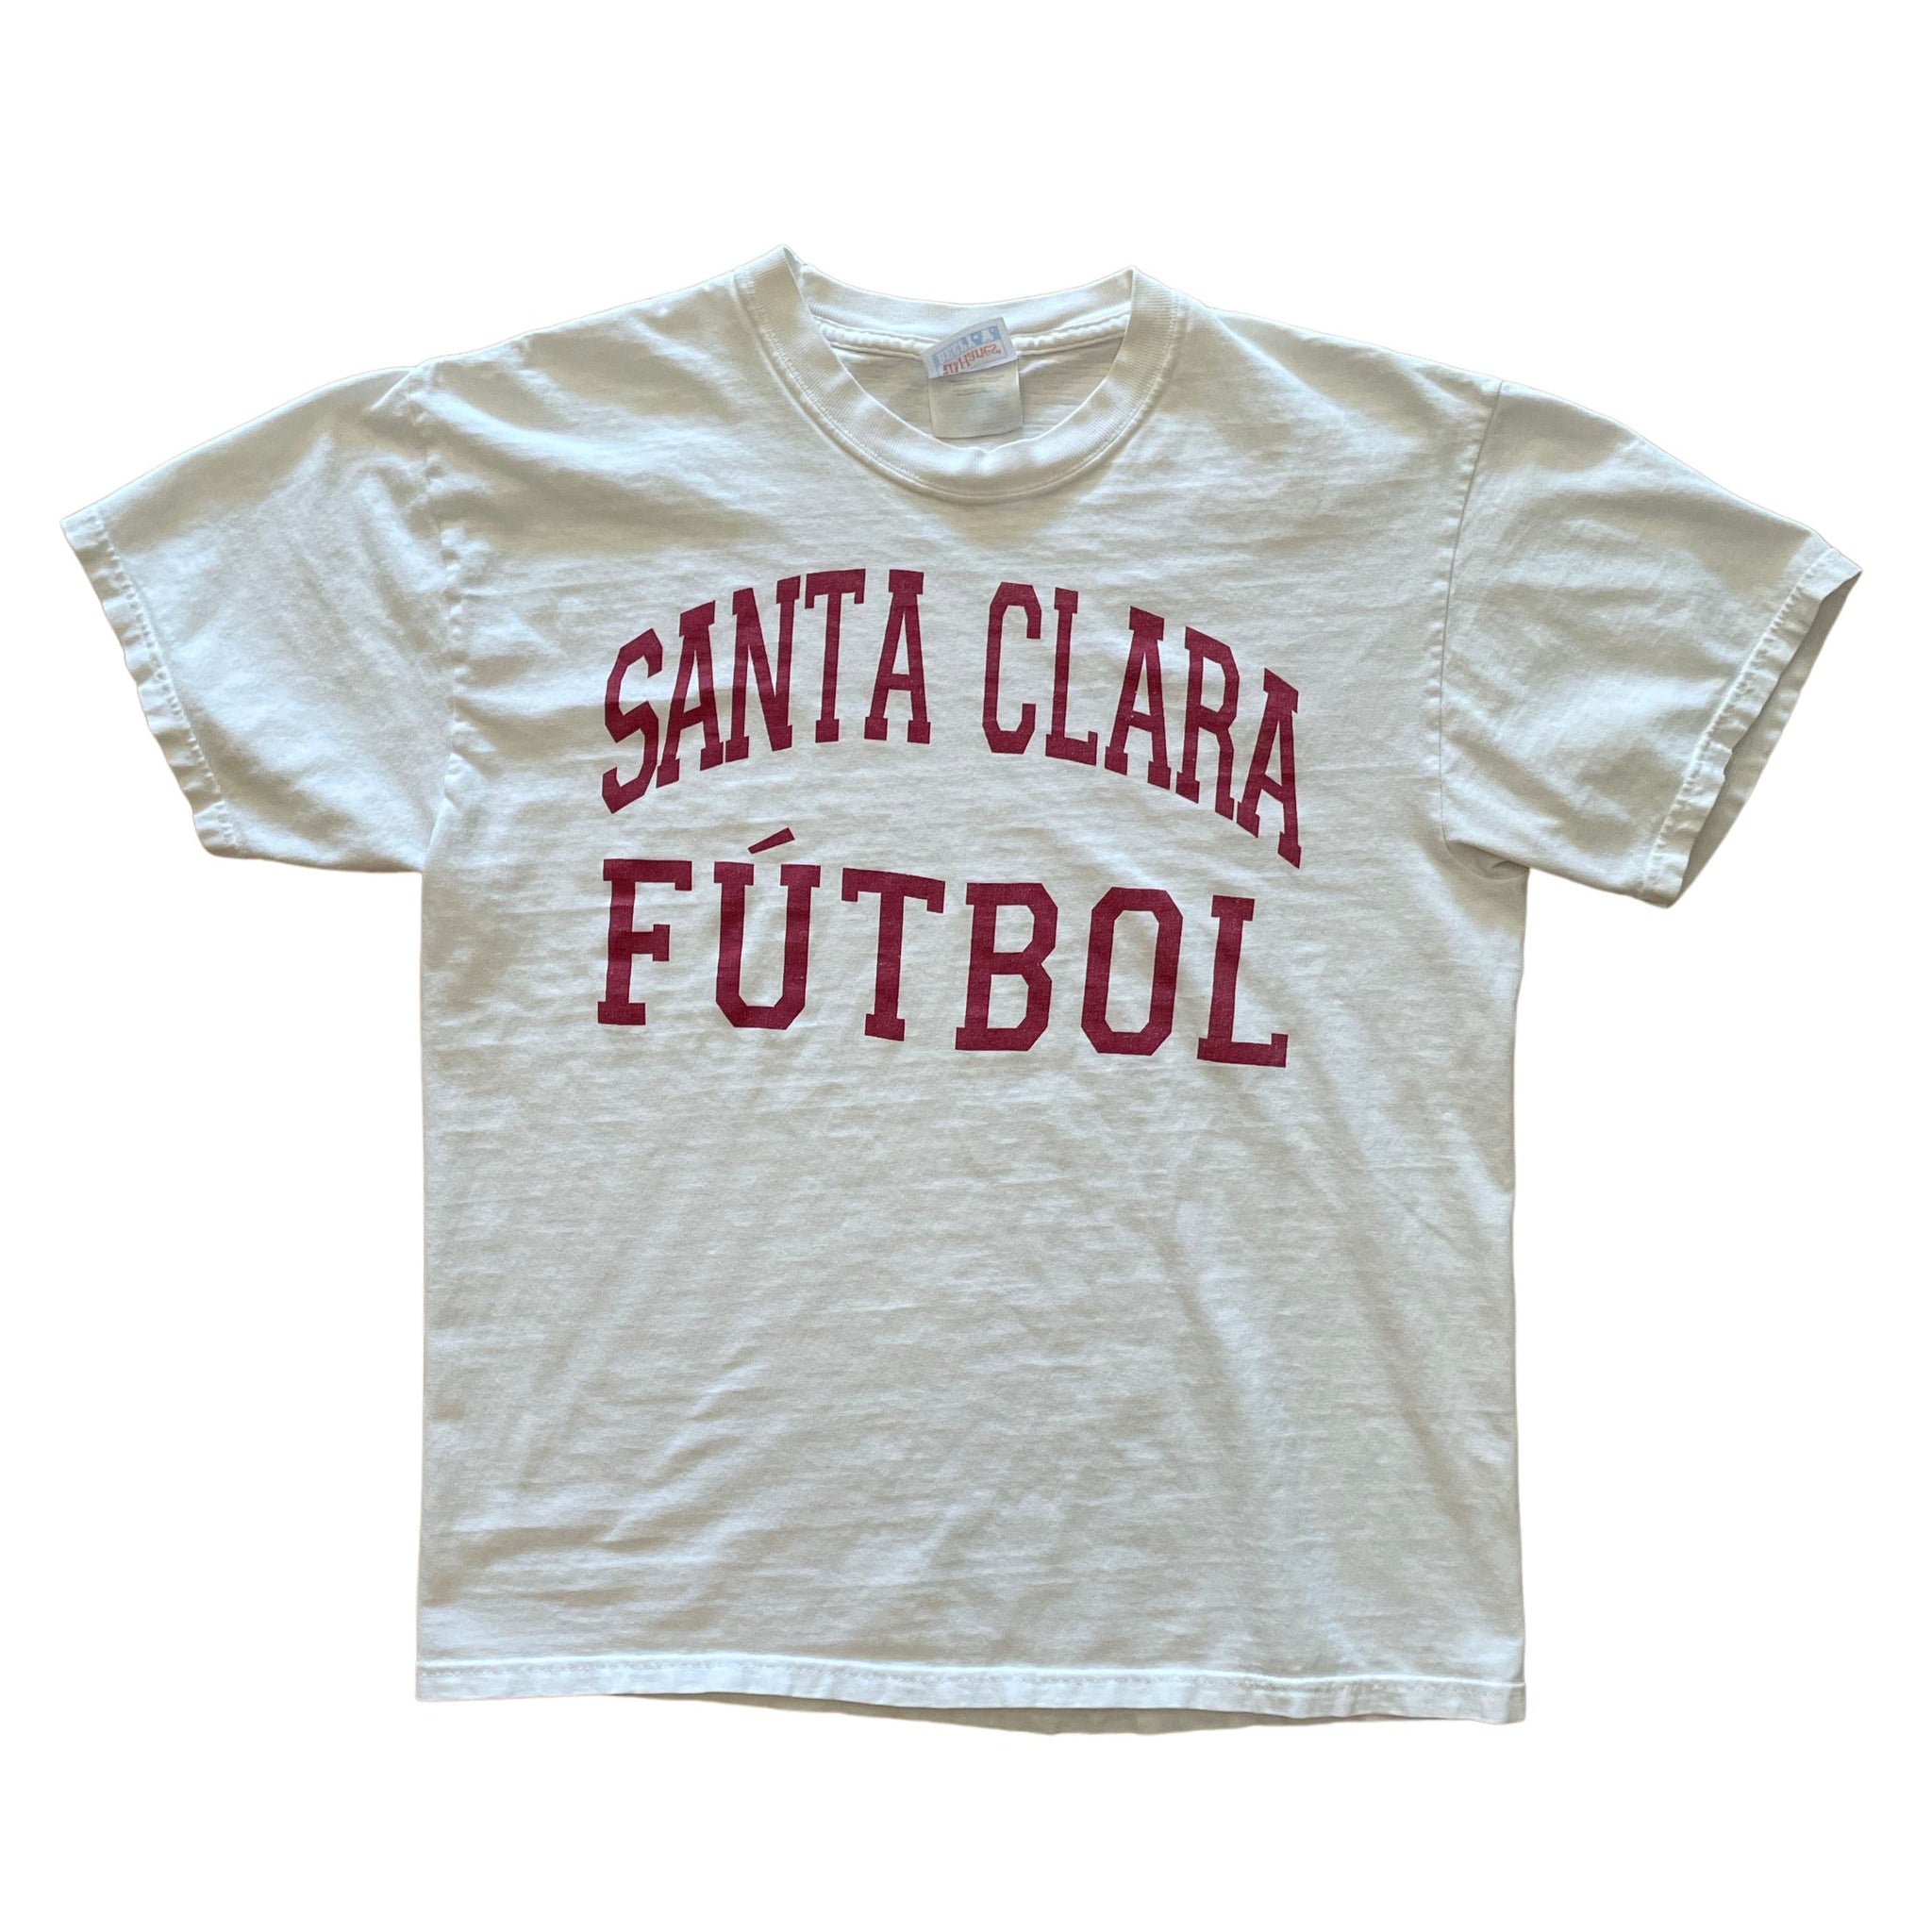 Santa Clara Futbol T-Shirt - S